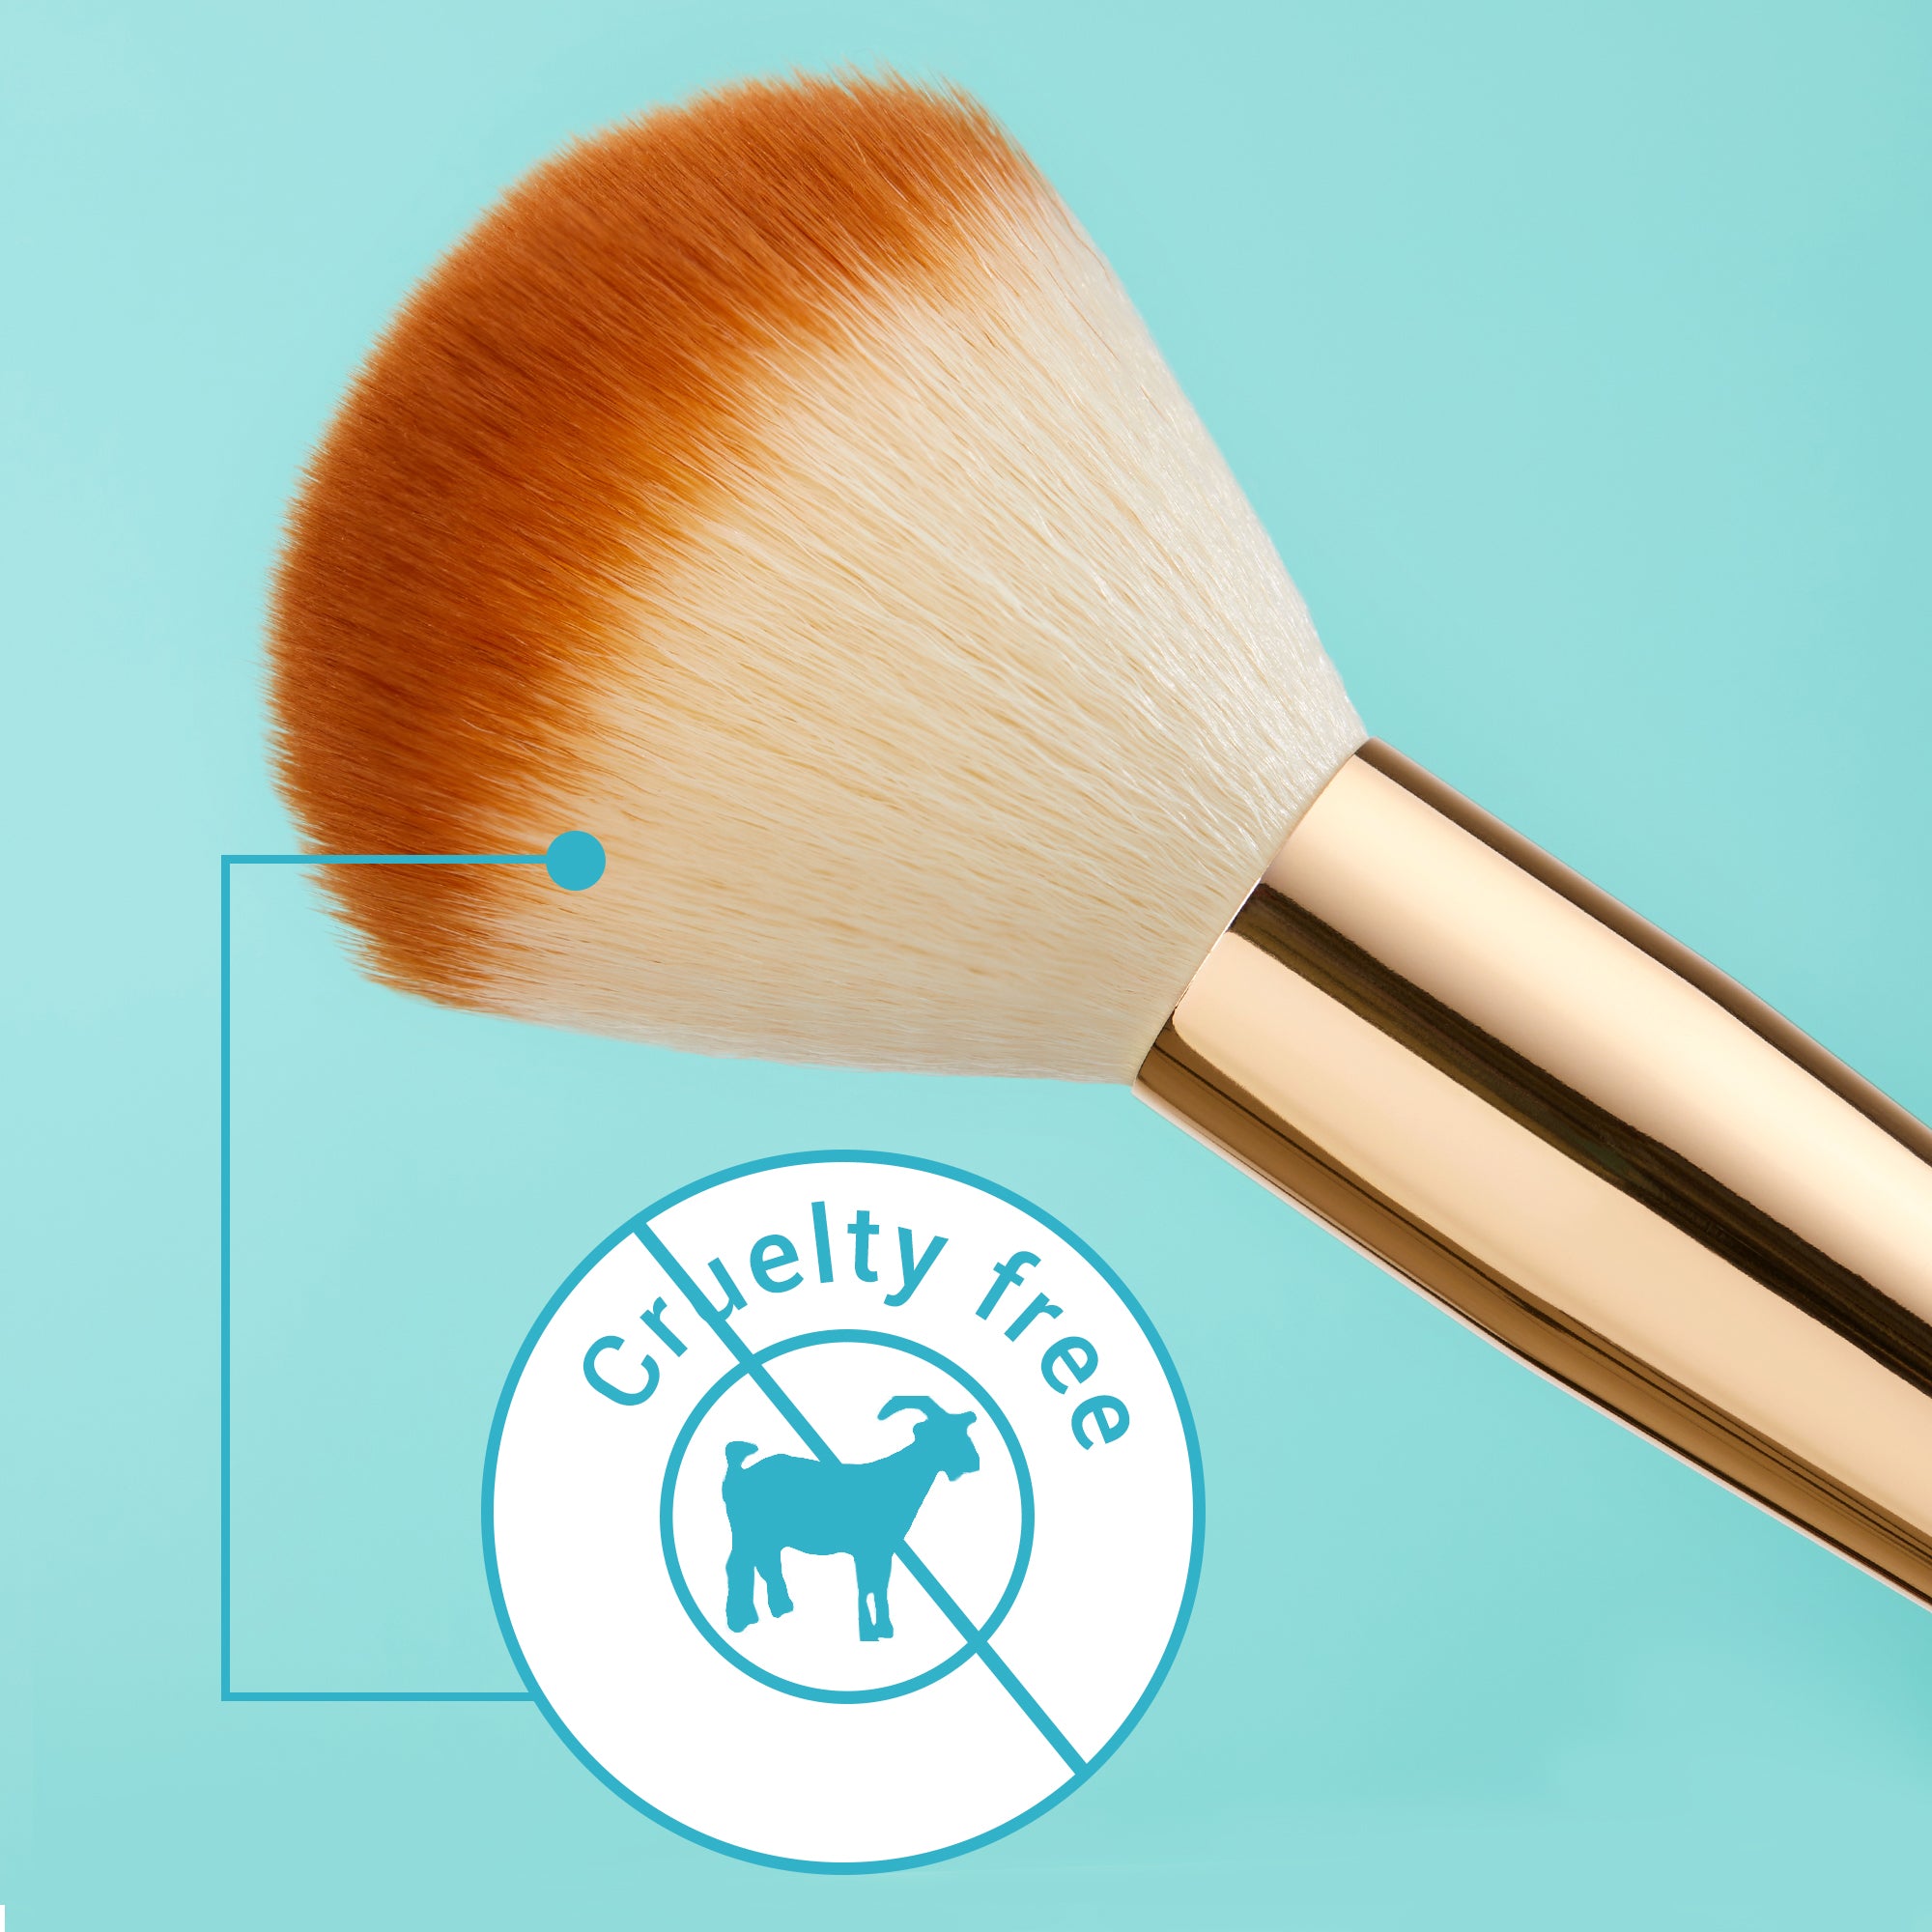 cruelty free makeup brush set - Jessup beauty